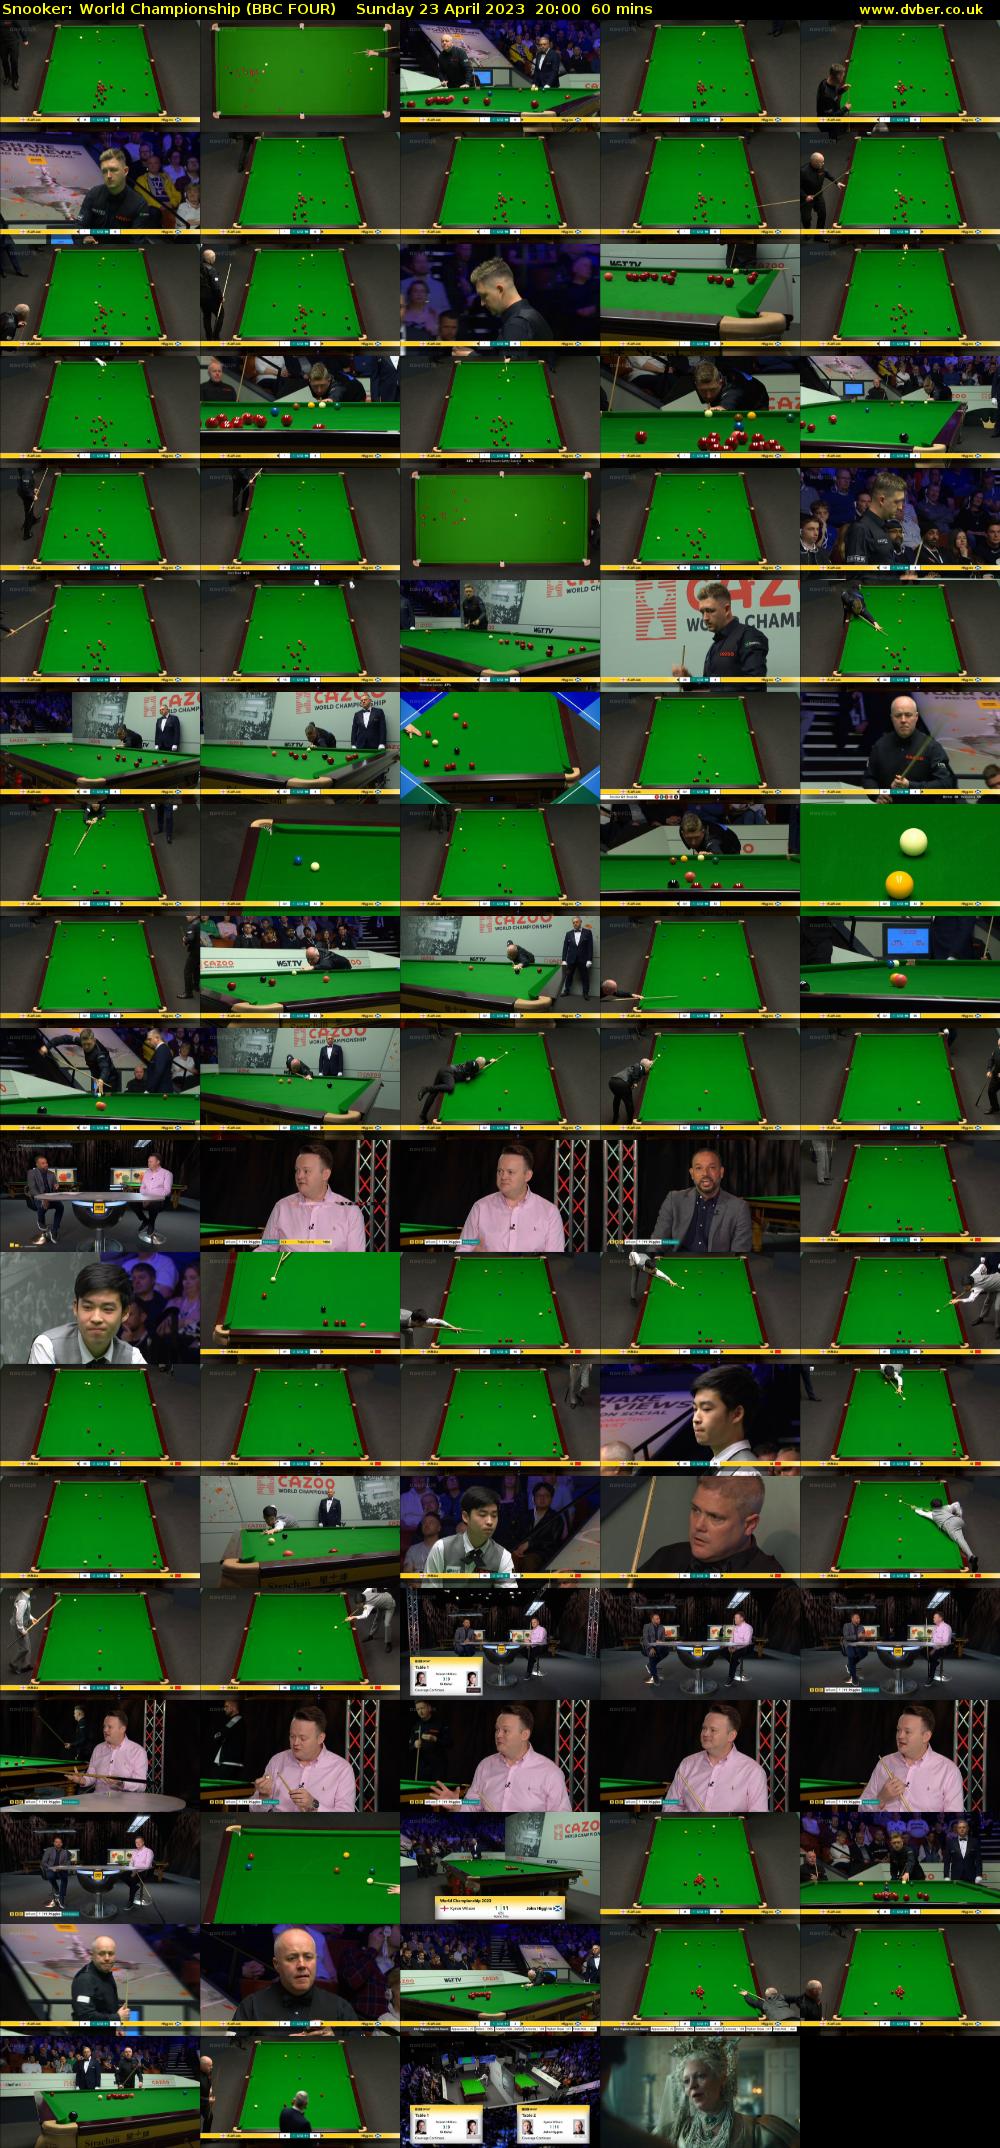 Snooker: World Championship (BBC FOUR) Sunday 23 April 2023 20:00 - 21:00